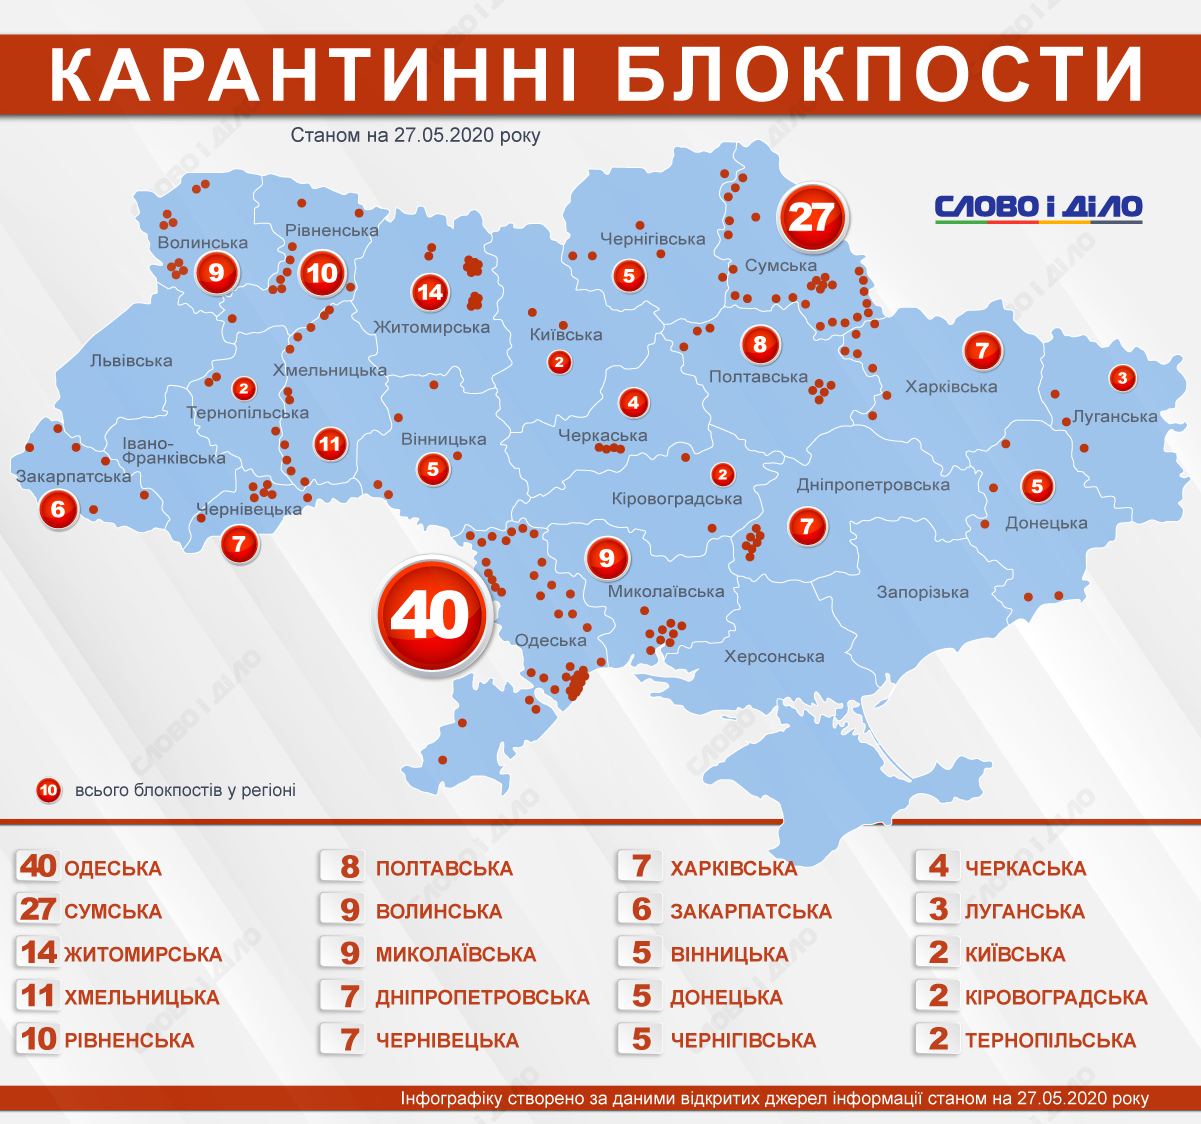 http://media.slovoidilo.ua/media/infographics/12/111658/111658-1_uk_origin.png